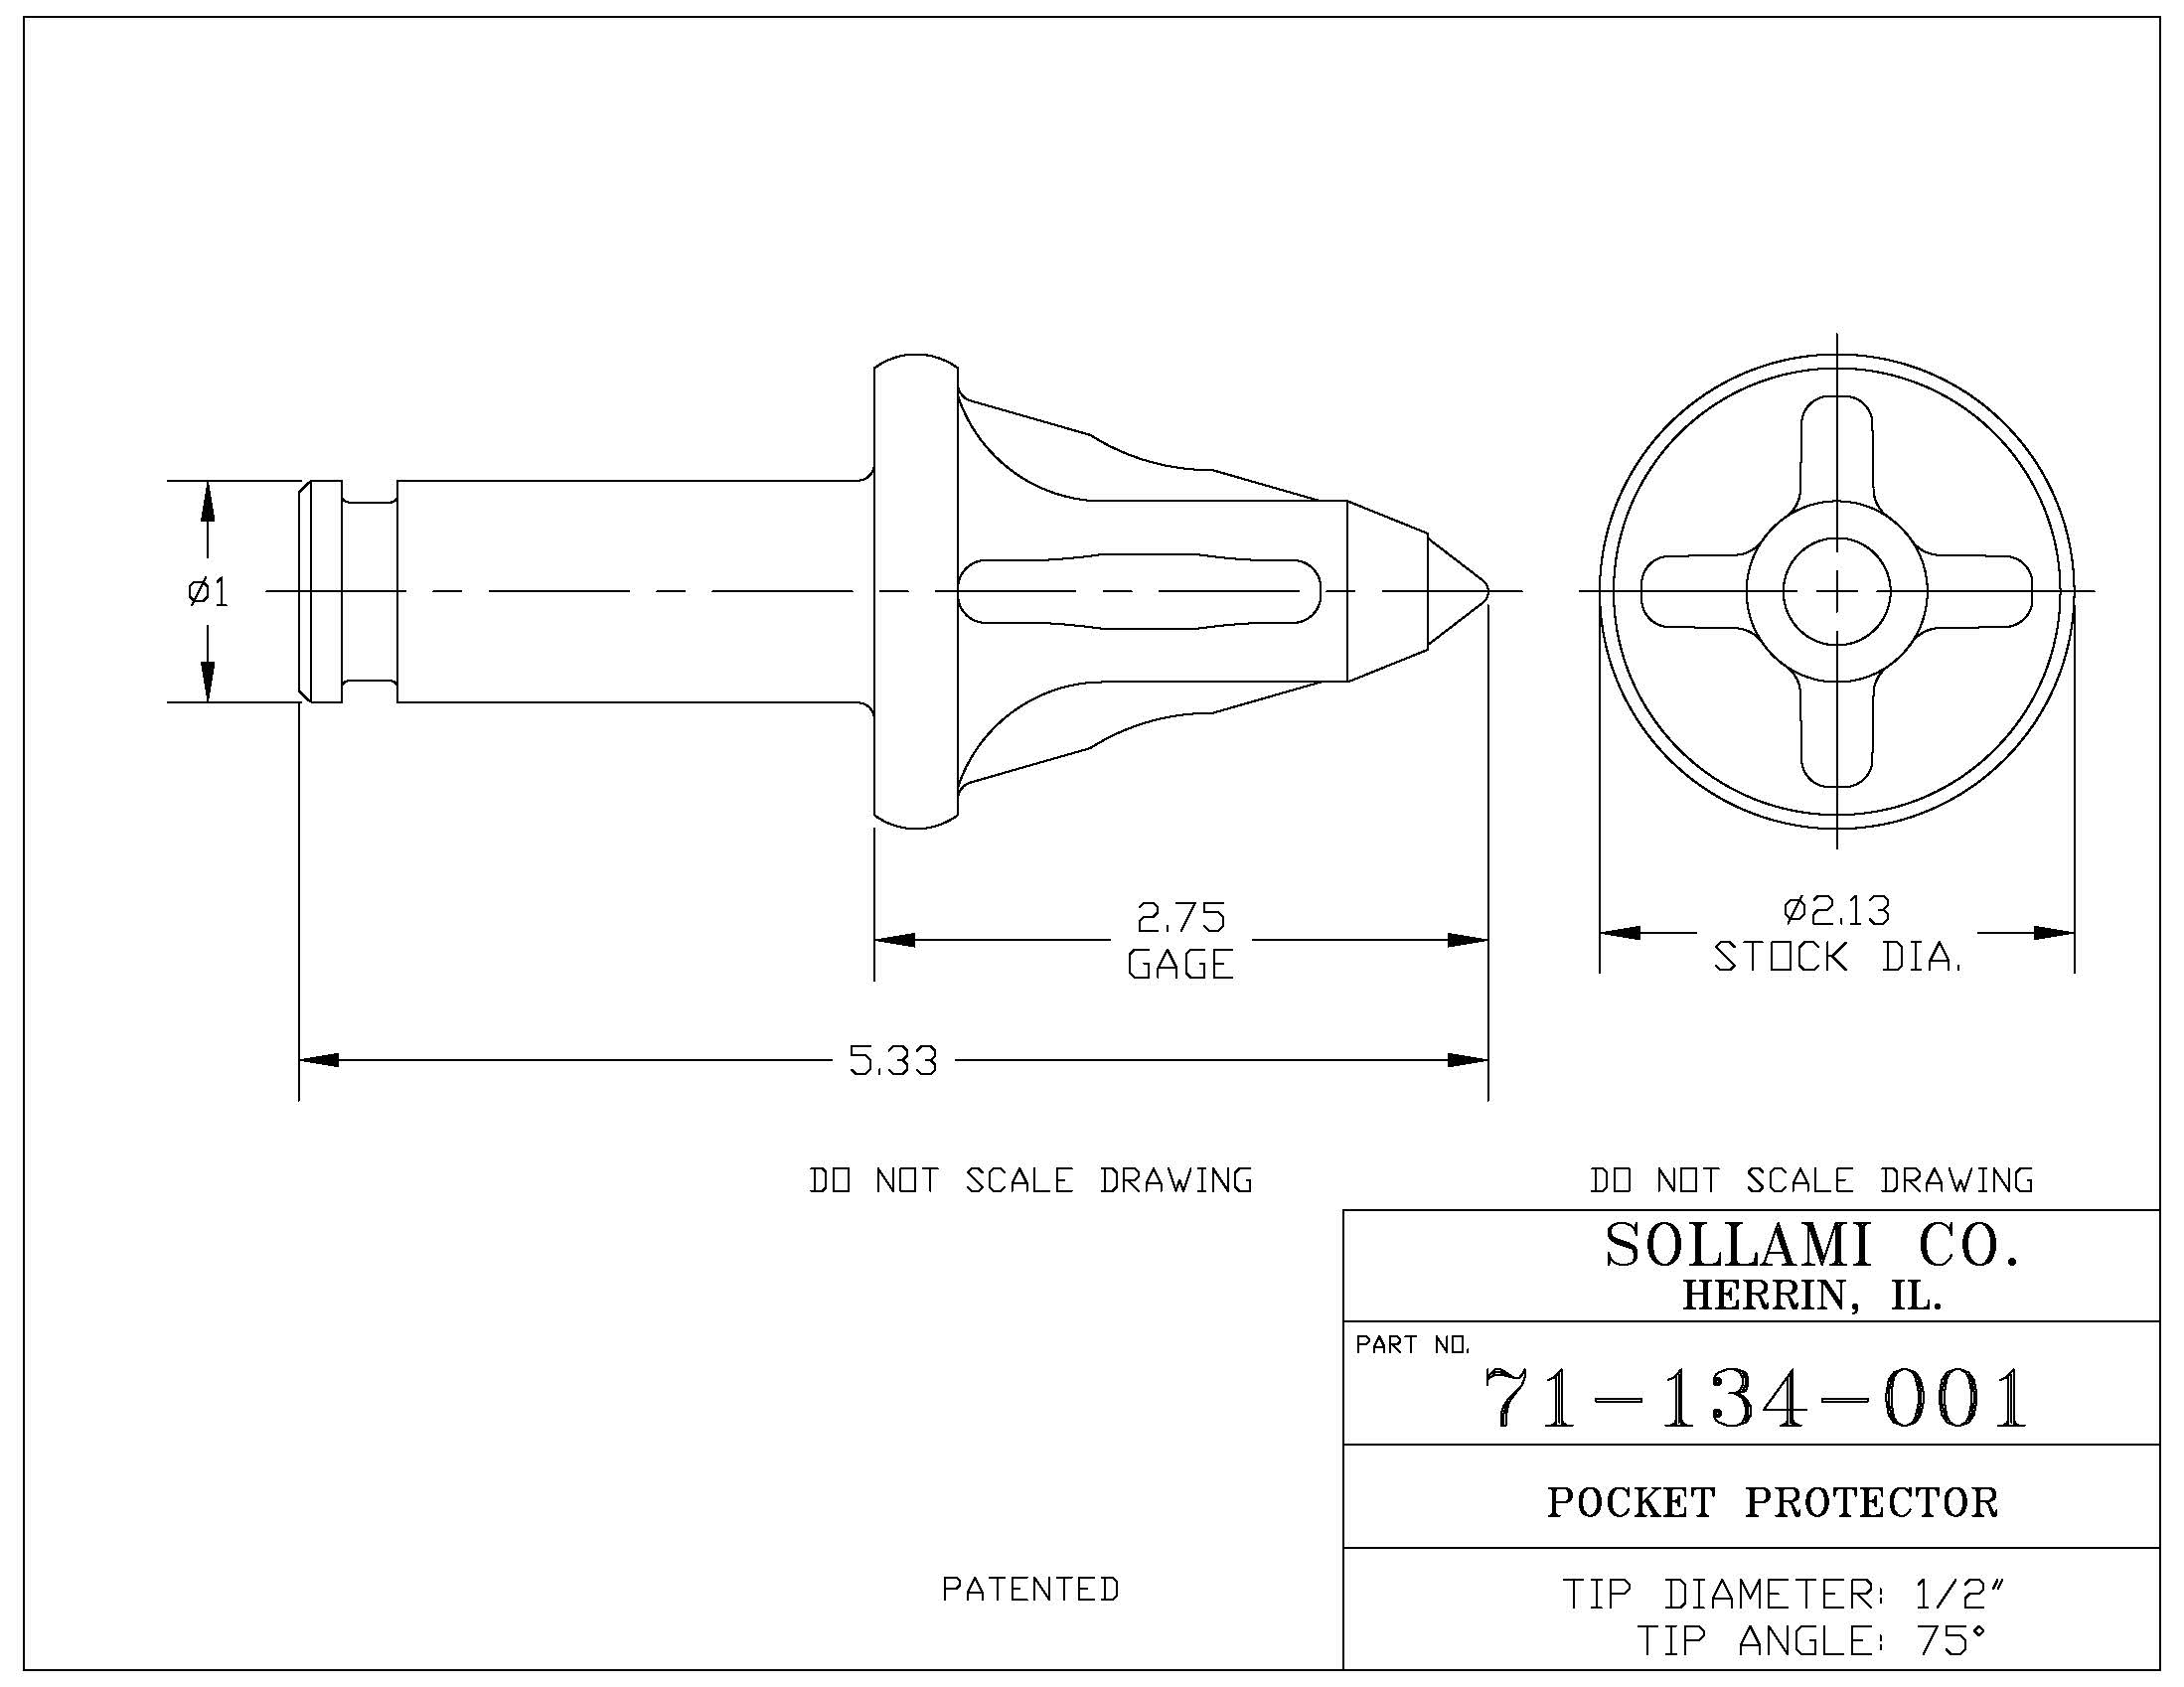 Sollami Company Pocket Protector 71134-001